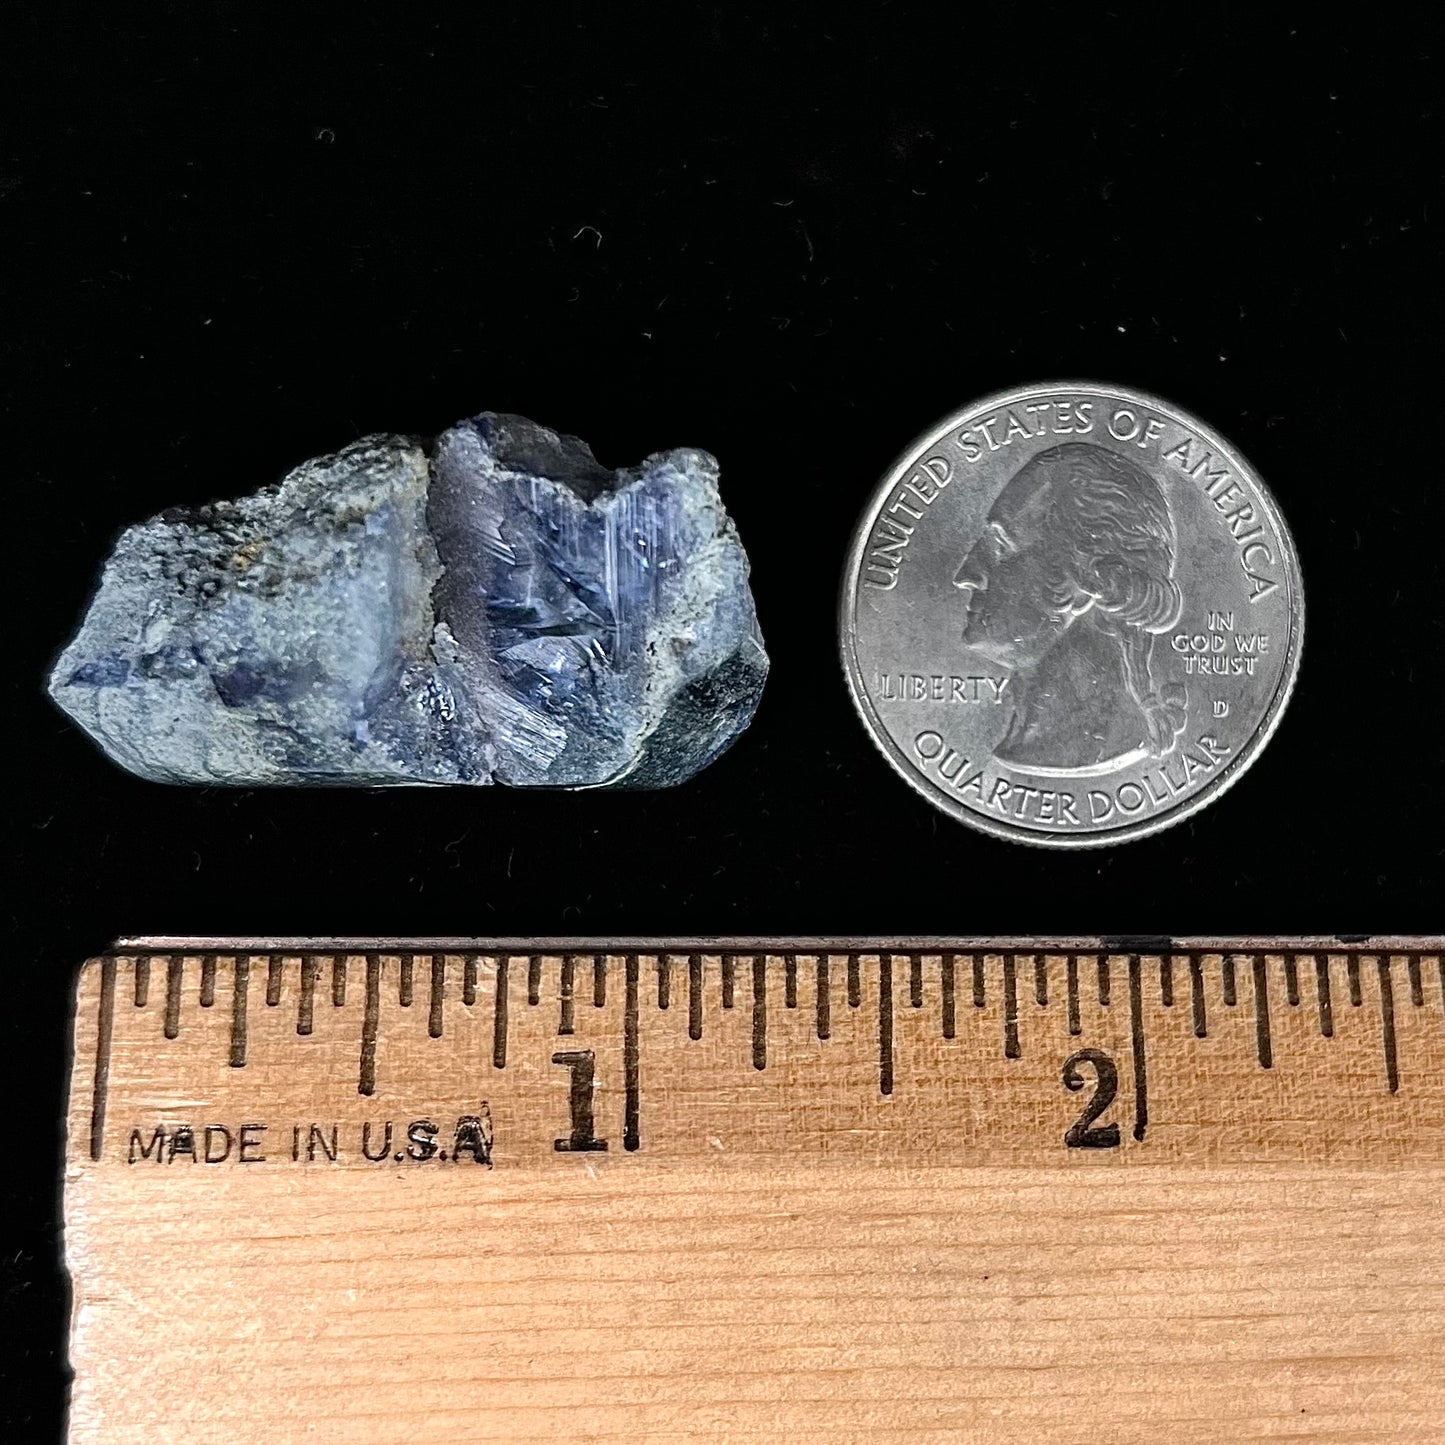 A natural blue benitoite crystal from San Benito County, California.